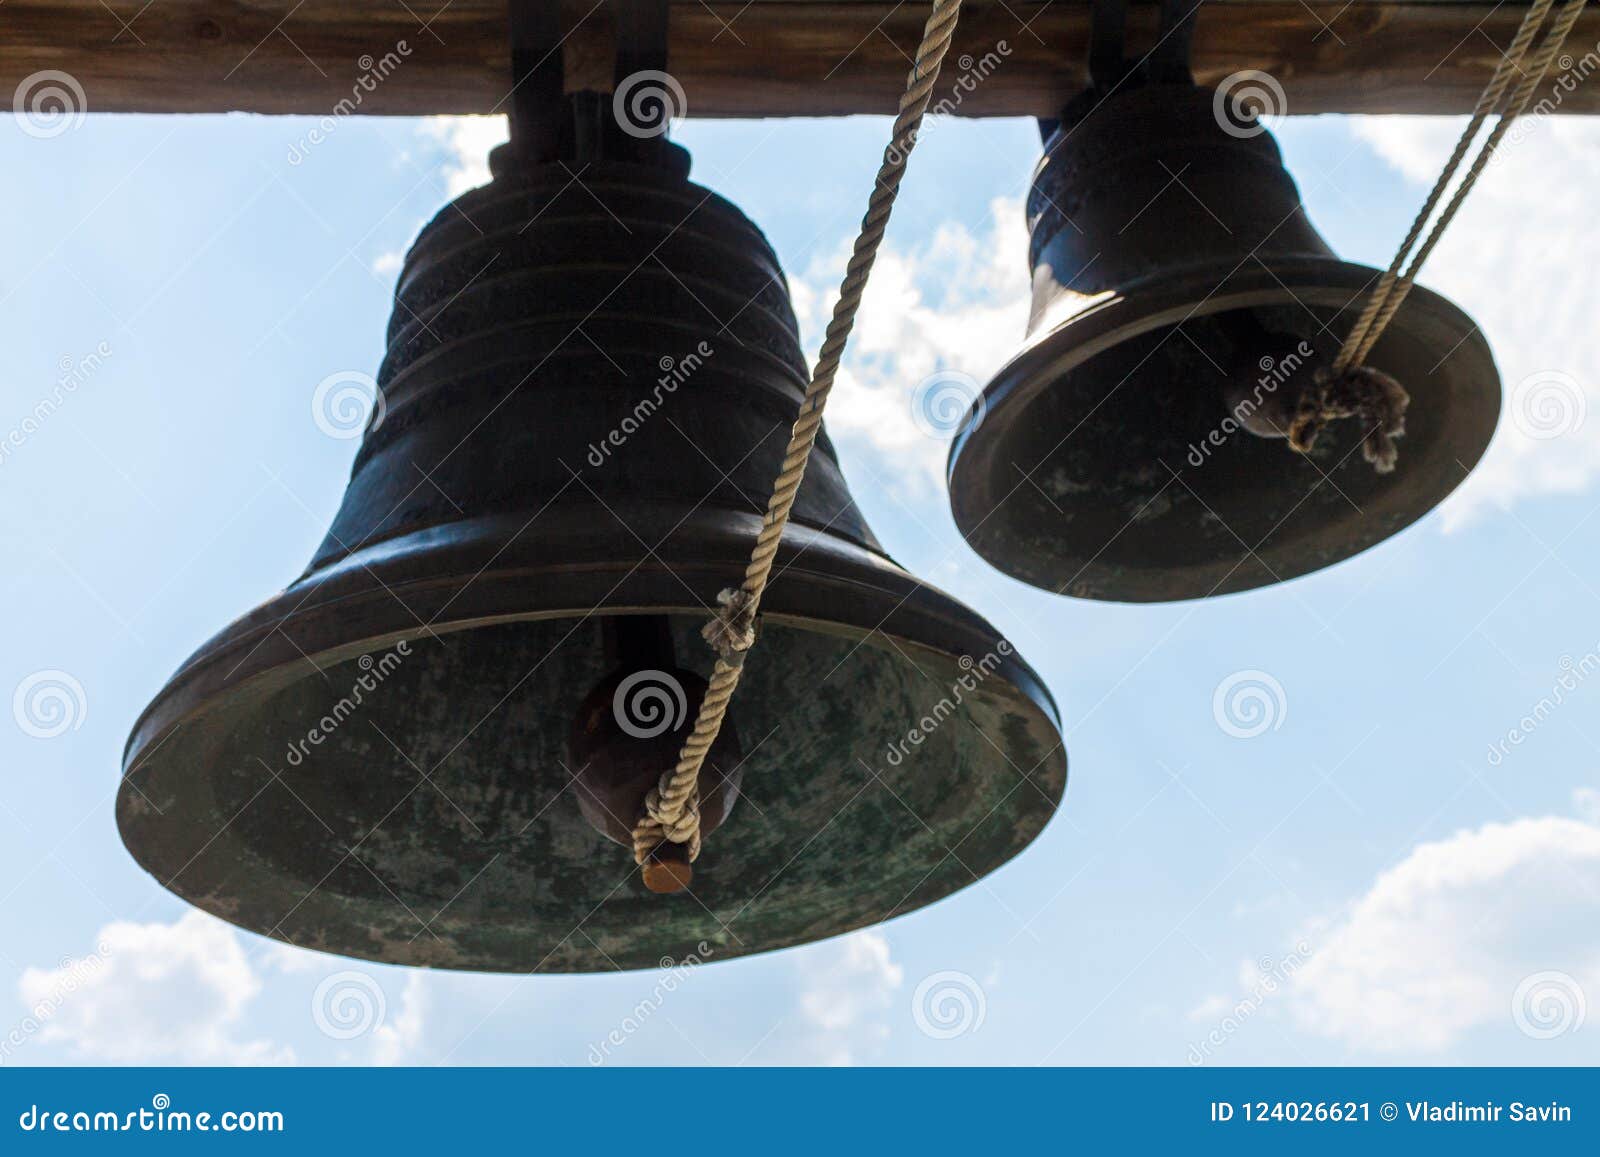 Russian Orthodox bell ringing - Wikipedia